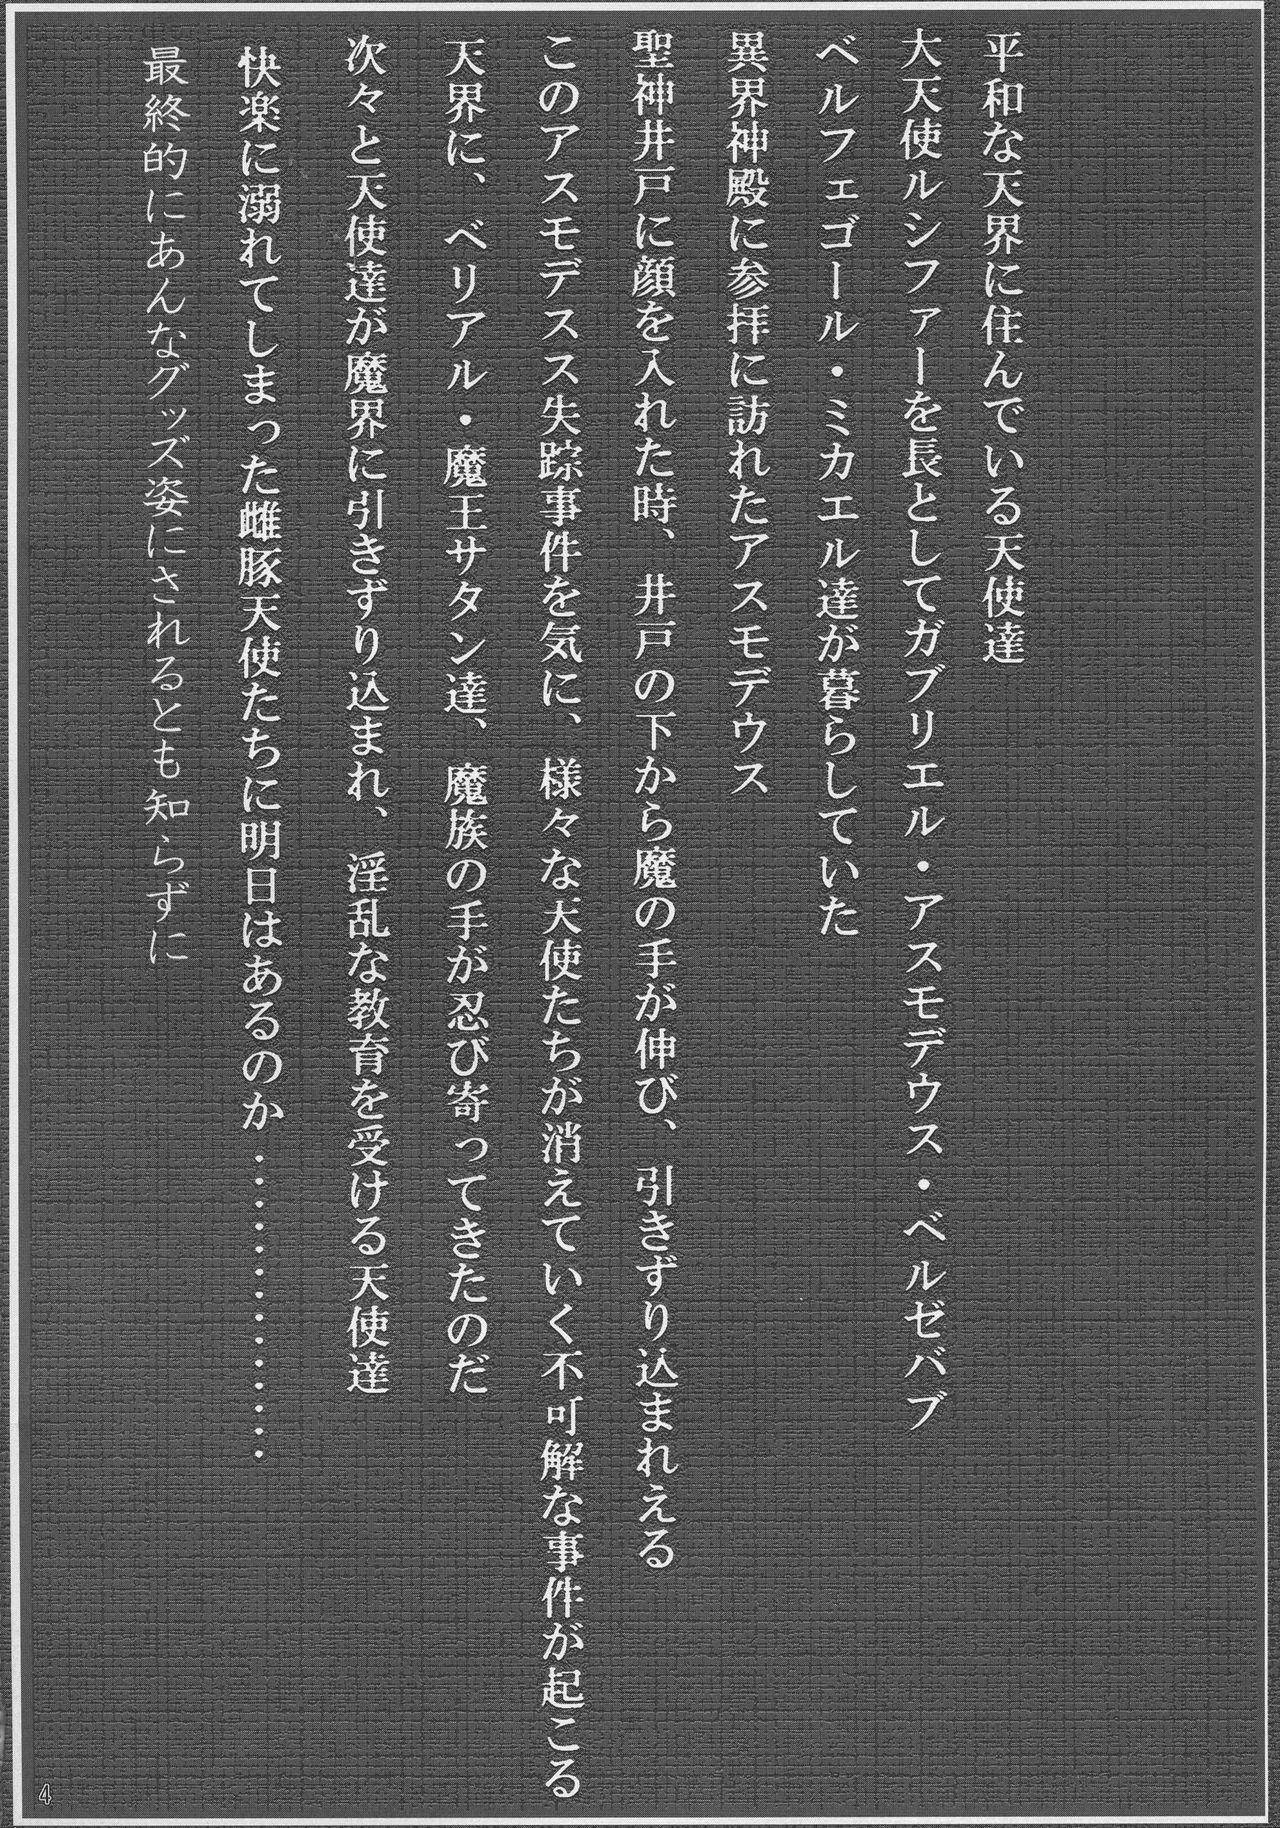 Ball Busting Tenshi no Oshiri Mousepad - Original Insertion - Page 2